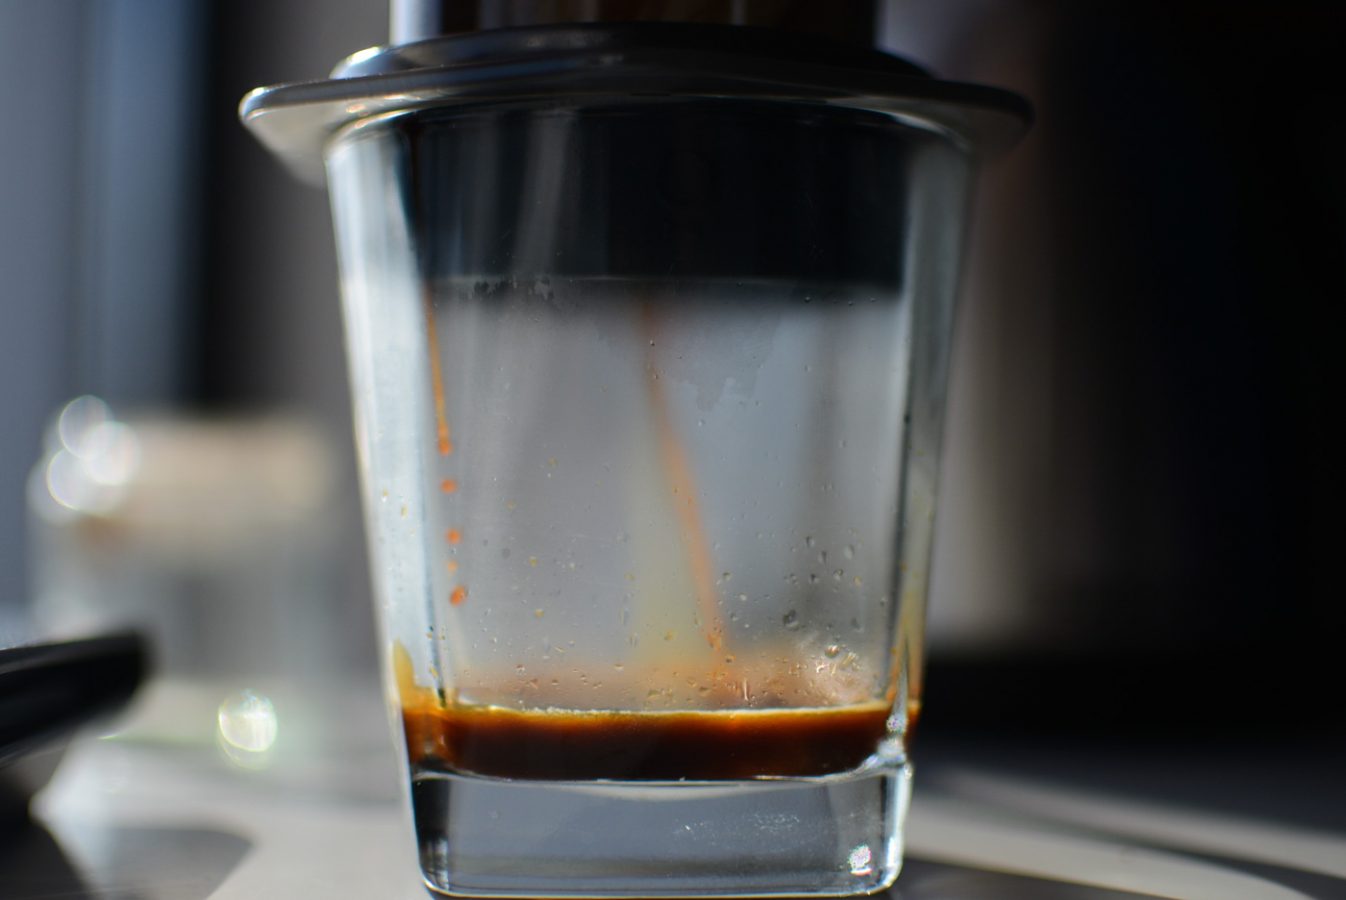 kawa - coffee plant - espresso - aeropress - prismo